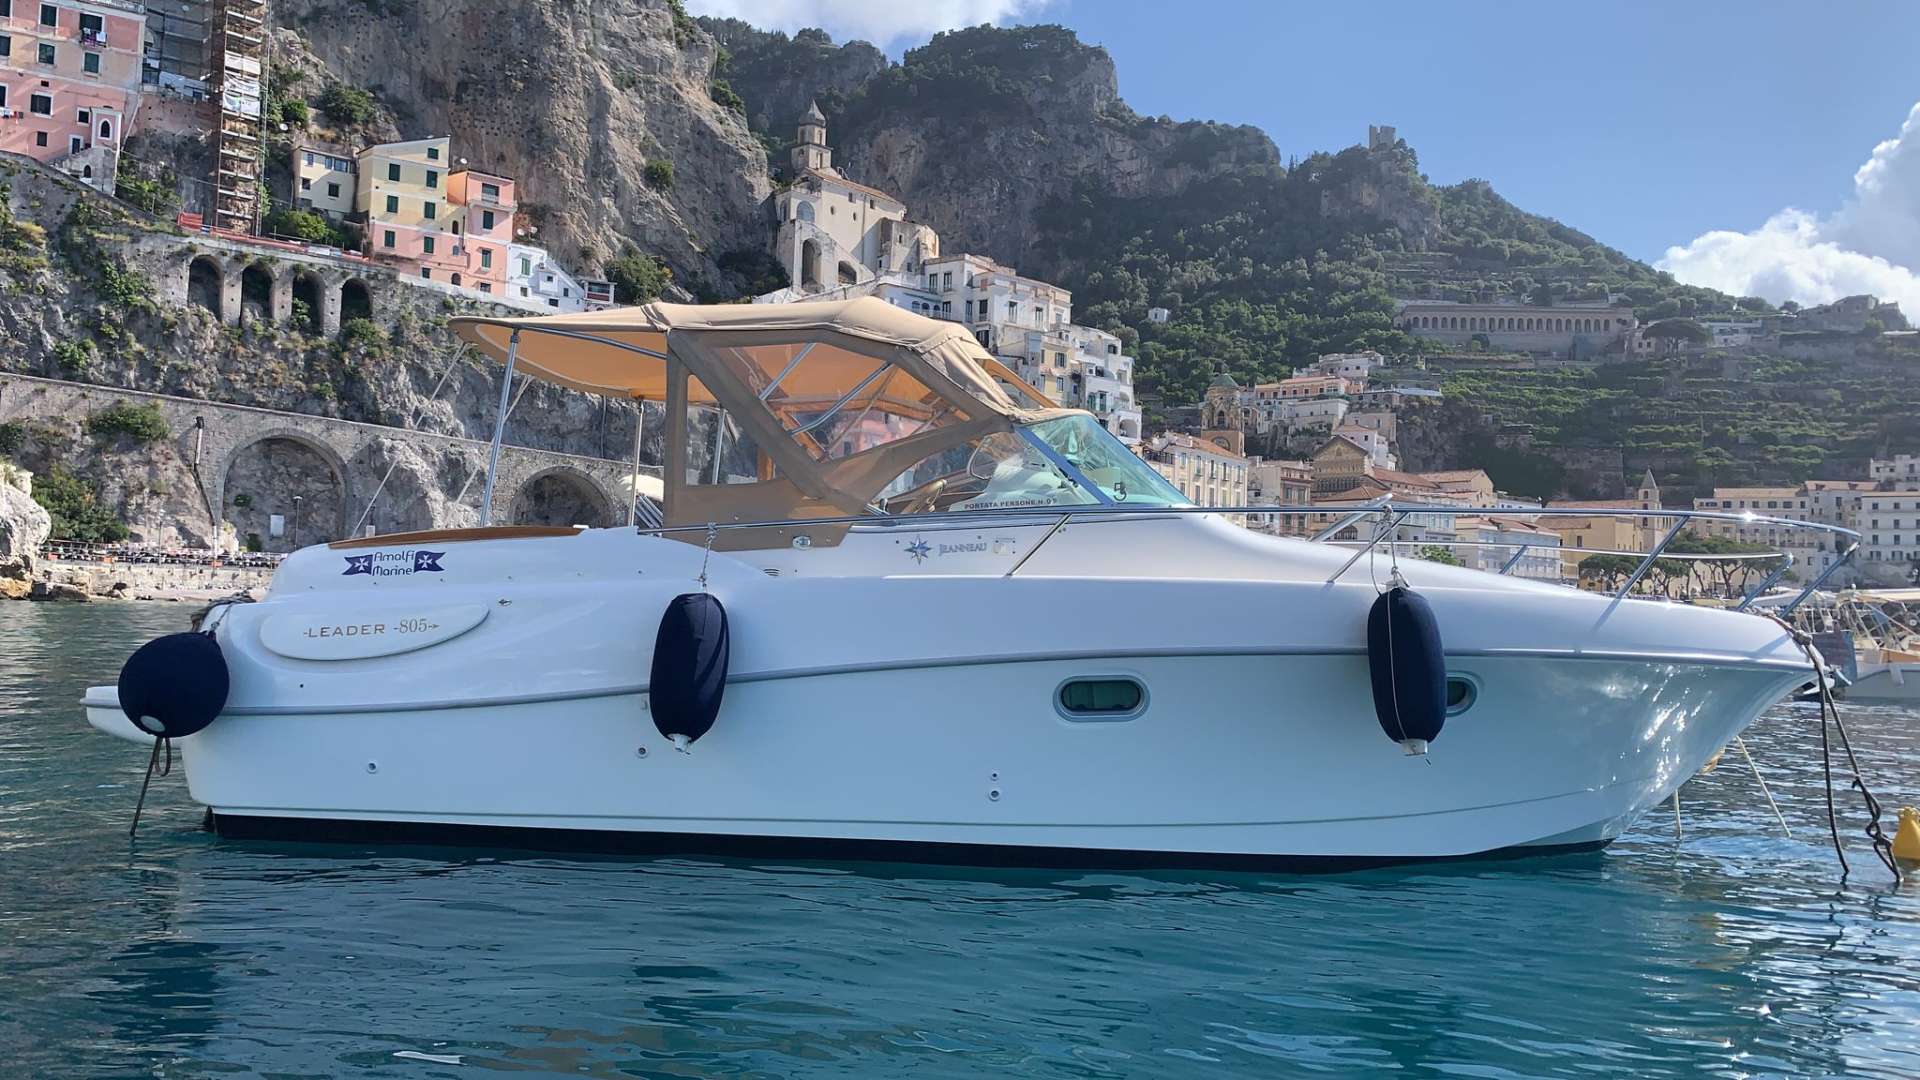 Leader 805 - Yacht Charter Amalfi Coast & Boat hire in Italy Campania Amalfi Coast Amalfi Amalfi 3